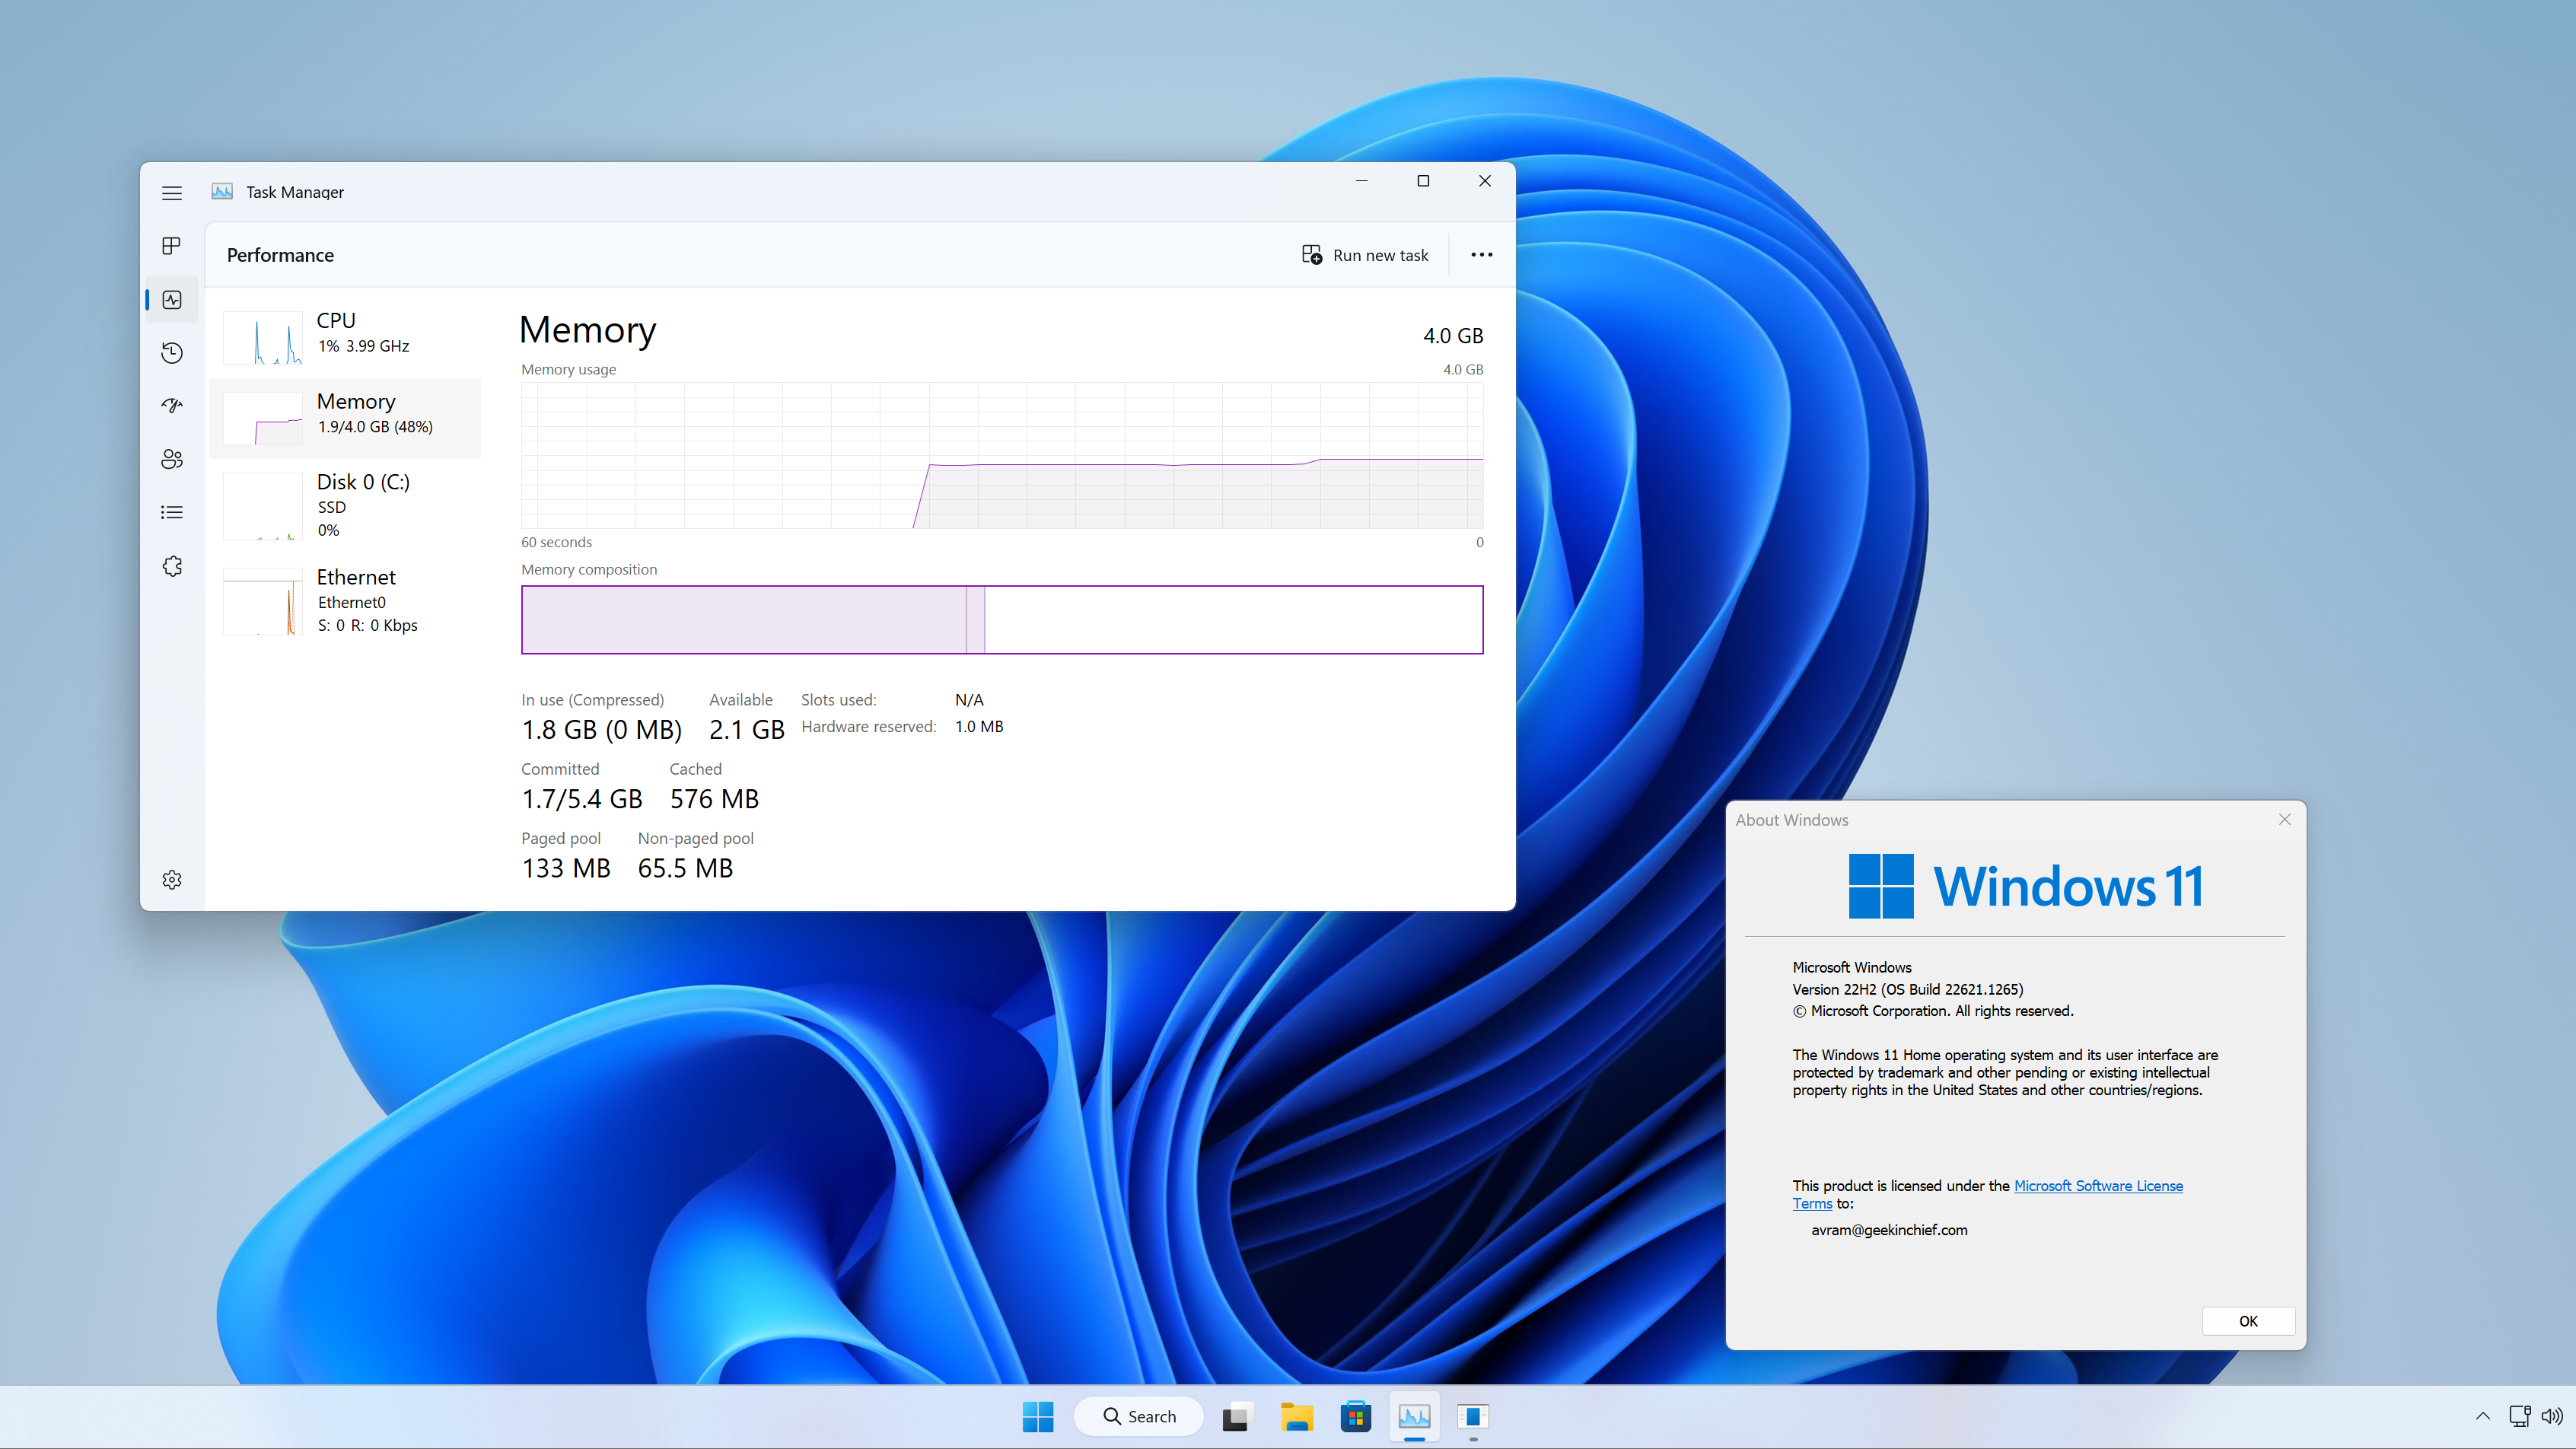 Install Windows 11 Lite for PC 32, 64 Bit Download File